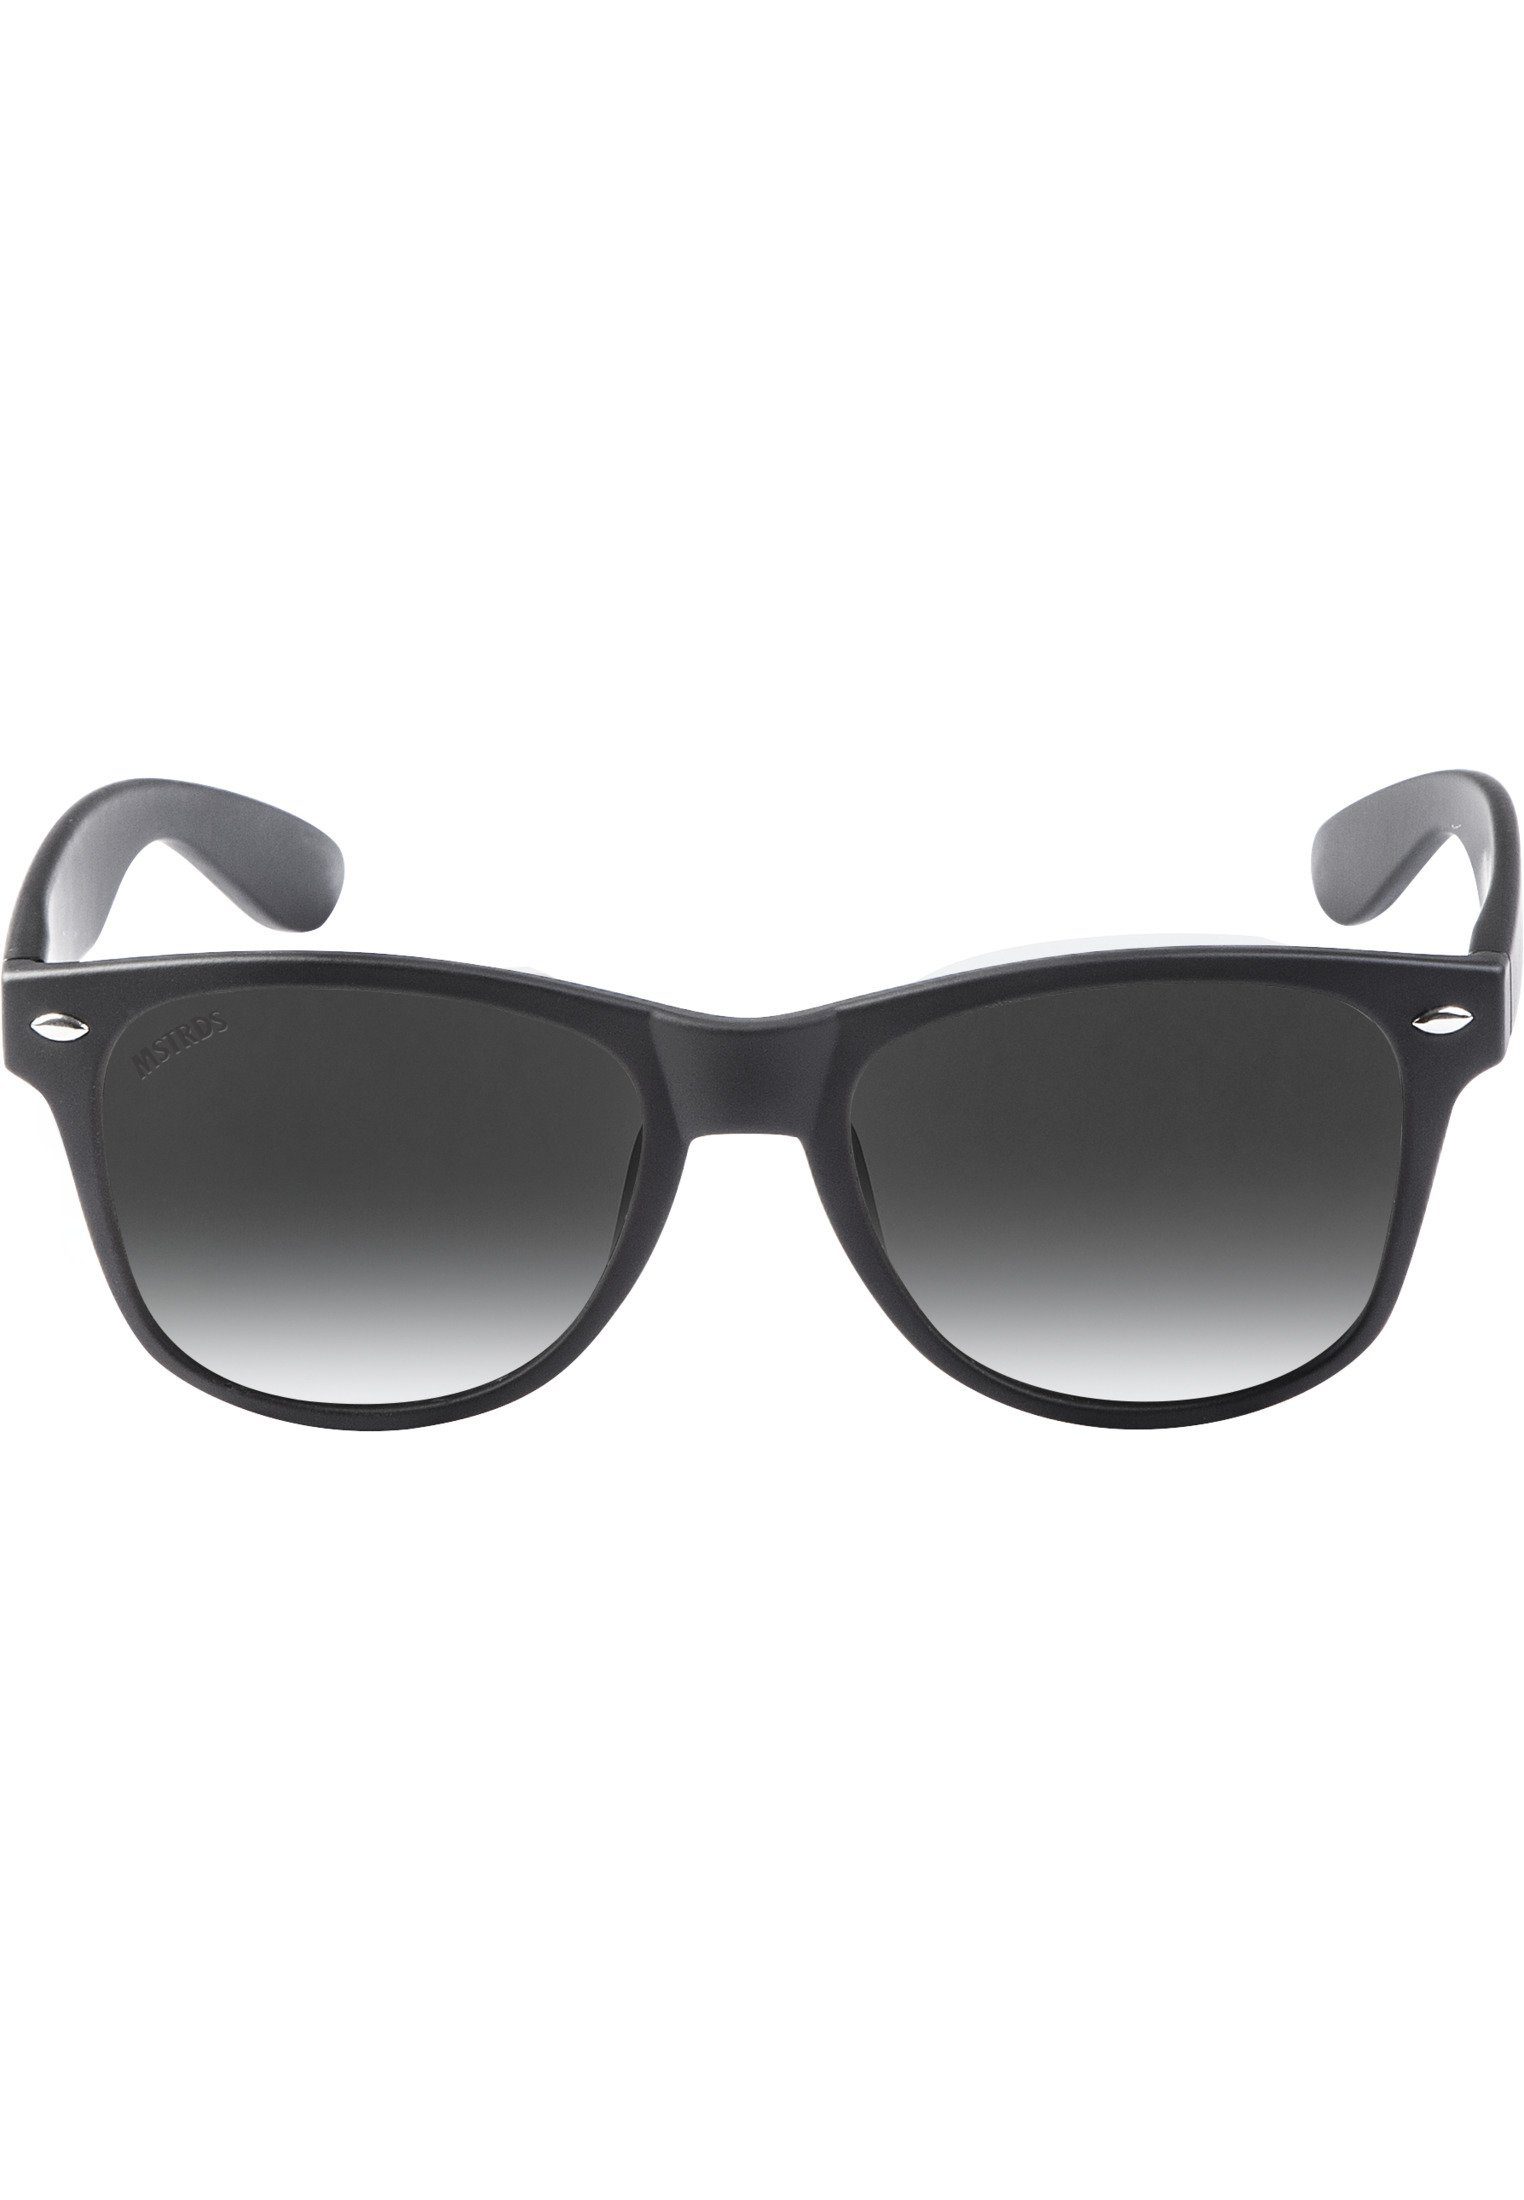 MSTRDS Sonnenbrille Accessoires Sunglasses Likoma Youth, Ideal auch für  Sport im Freien geeignet